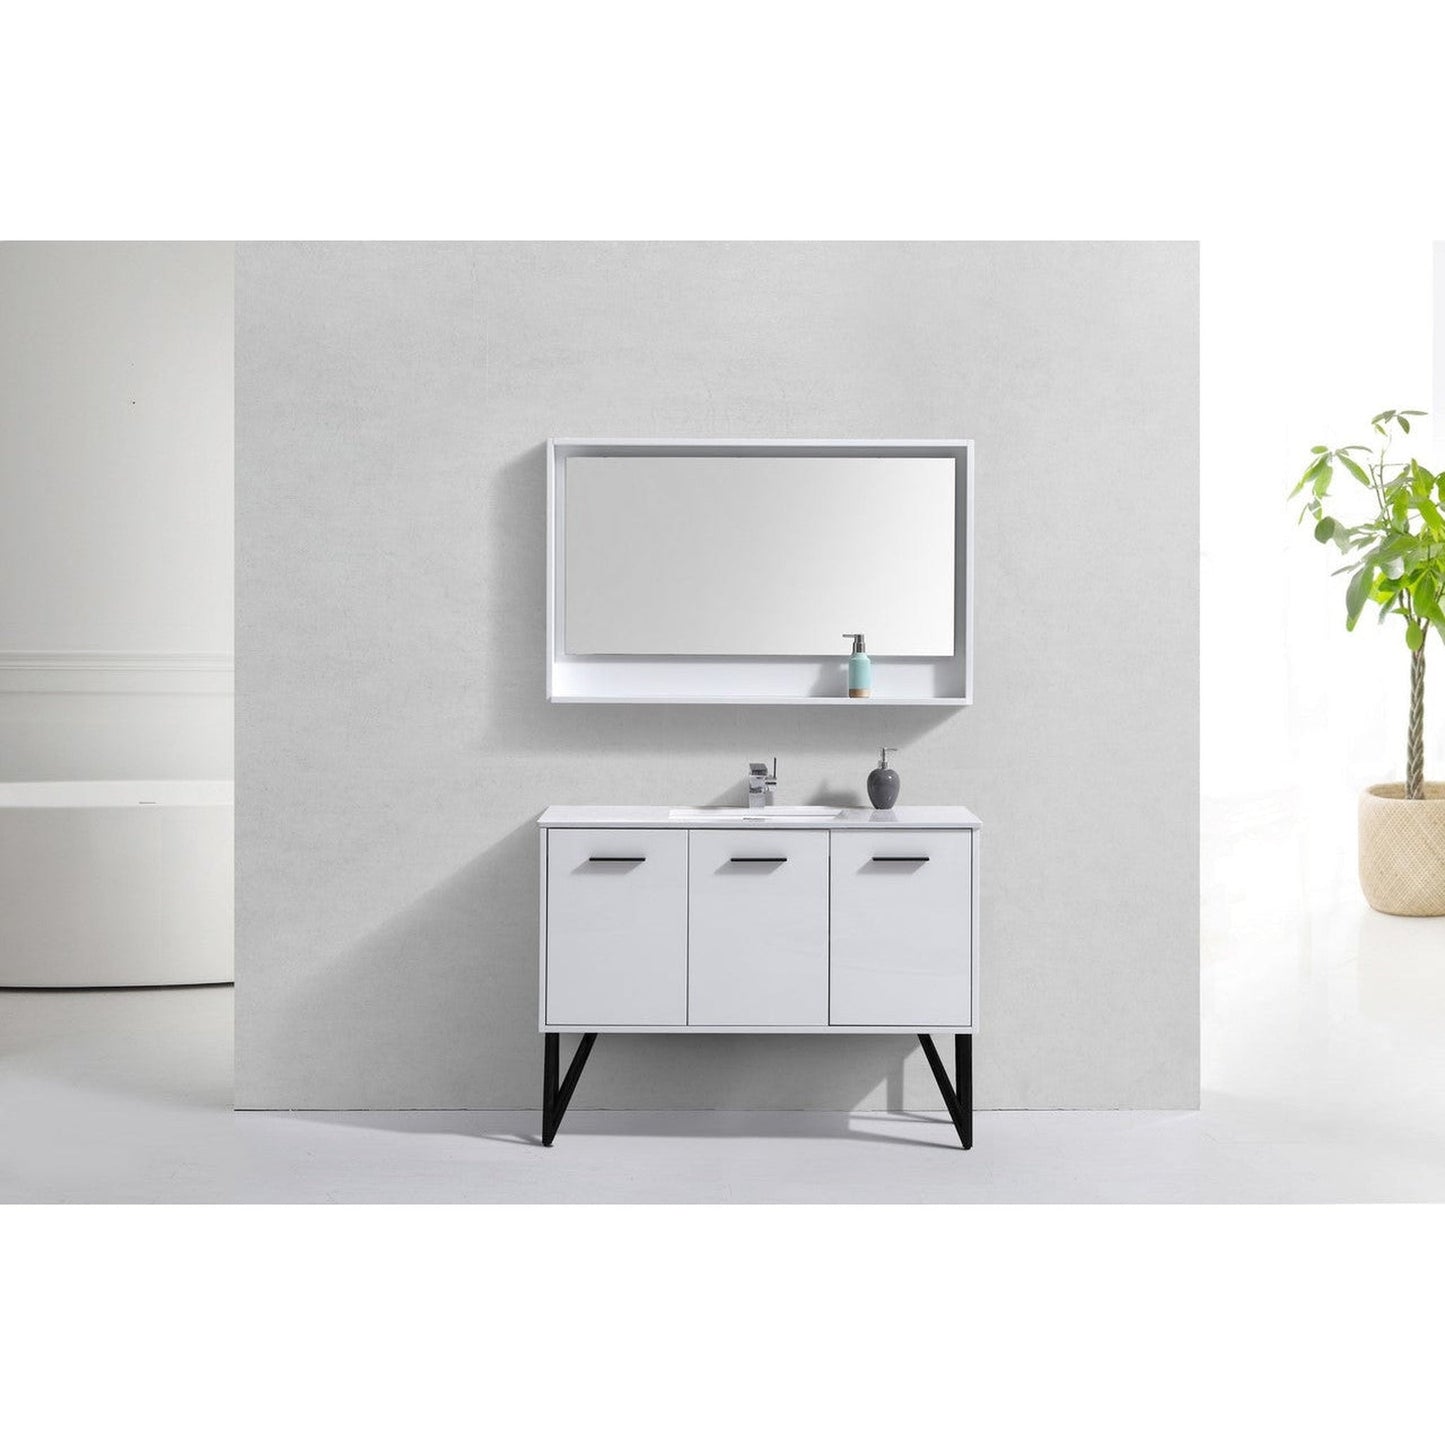 KubeBath Bosco 48" High Gloss White Modern Freestanding Bathroom Vanity With Single Undermount Sink With Overflow and 48" White Framed Mirror